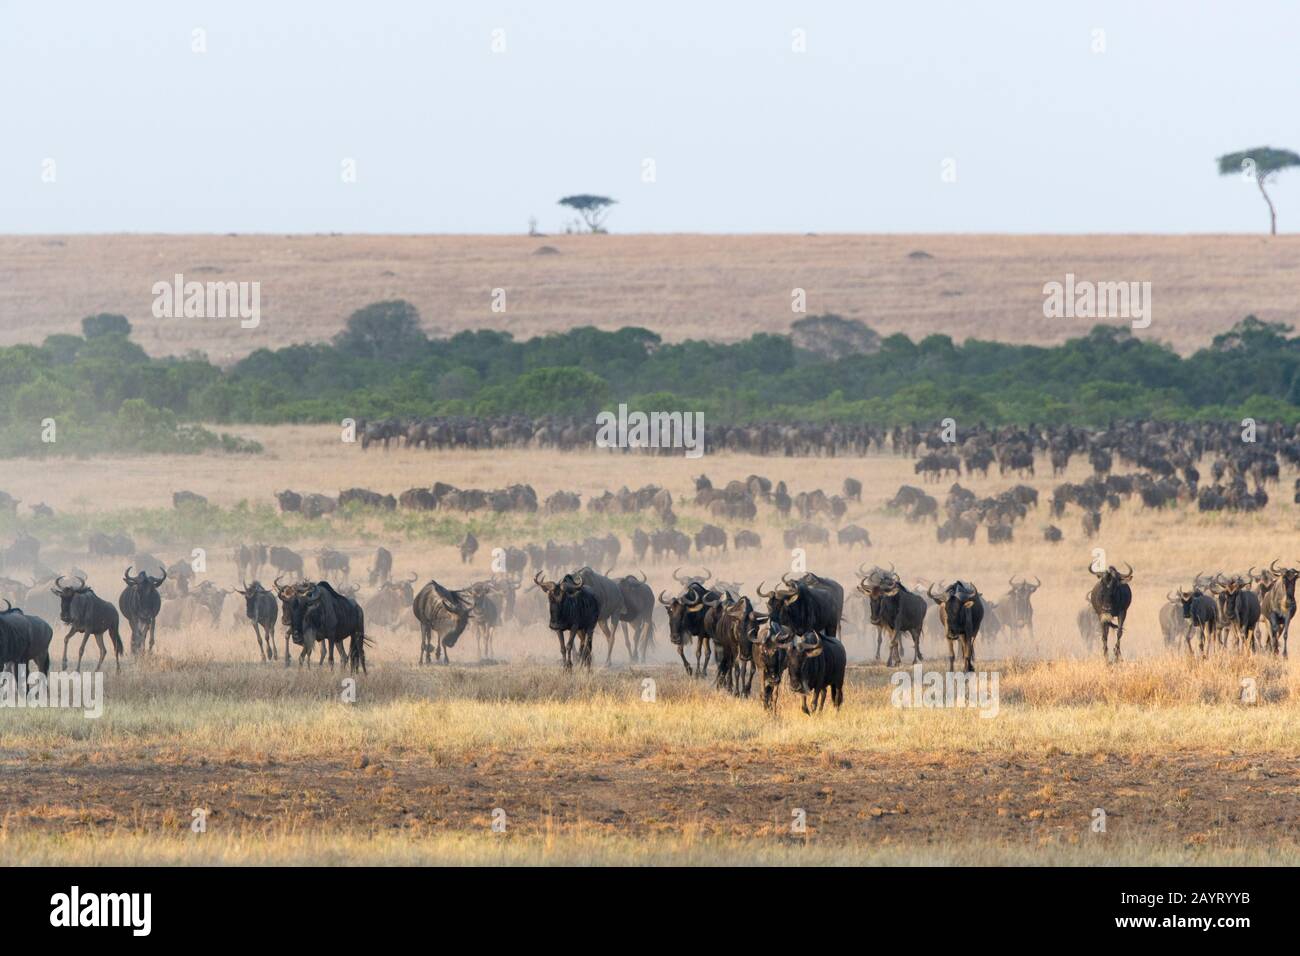 Wildebeests, also called gnus or wildebai, migrating through the grasslands towards the Mara River in the Masai Mara National Reserve in Kenya. Stock Photo